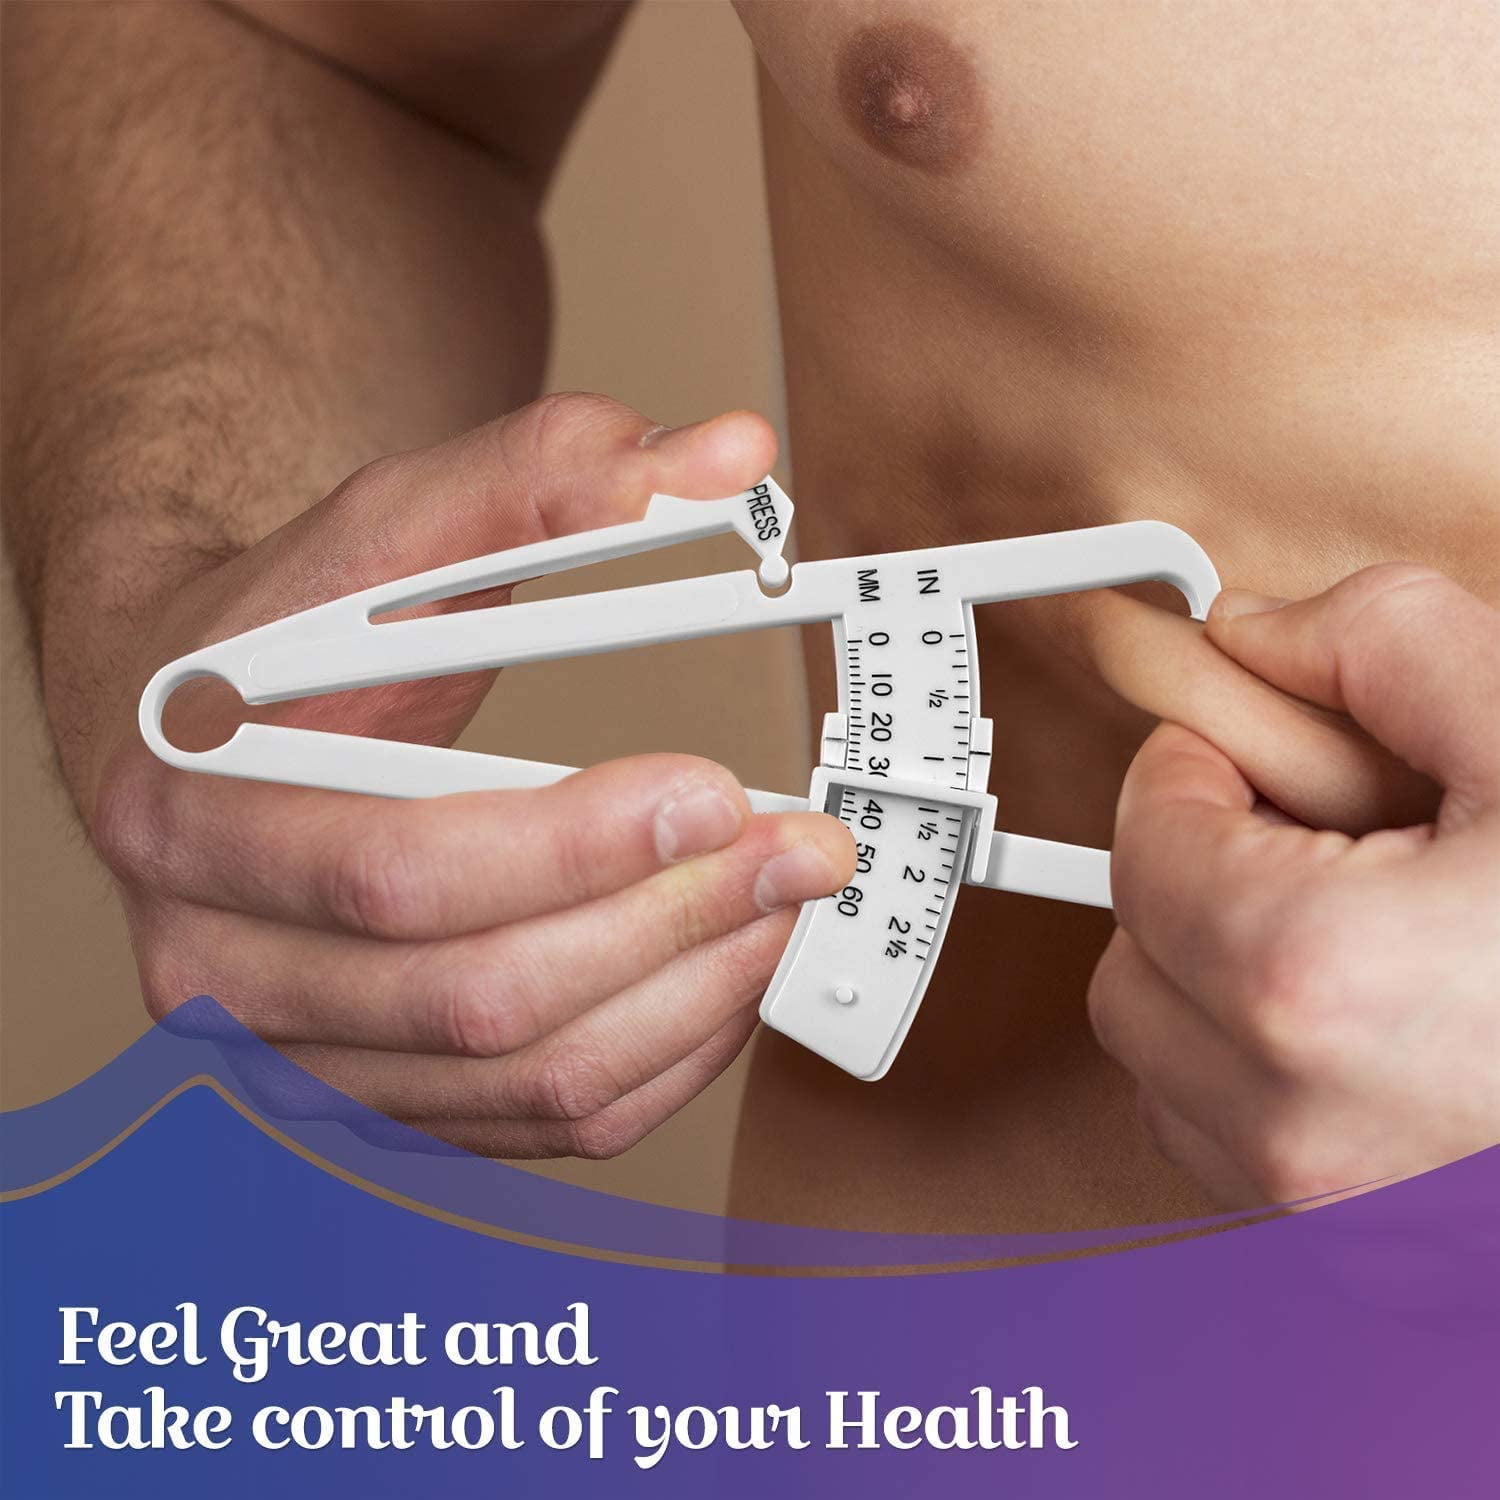 MEDca Body Tape Measure 2 P/K Accurate Body Fat Calculator